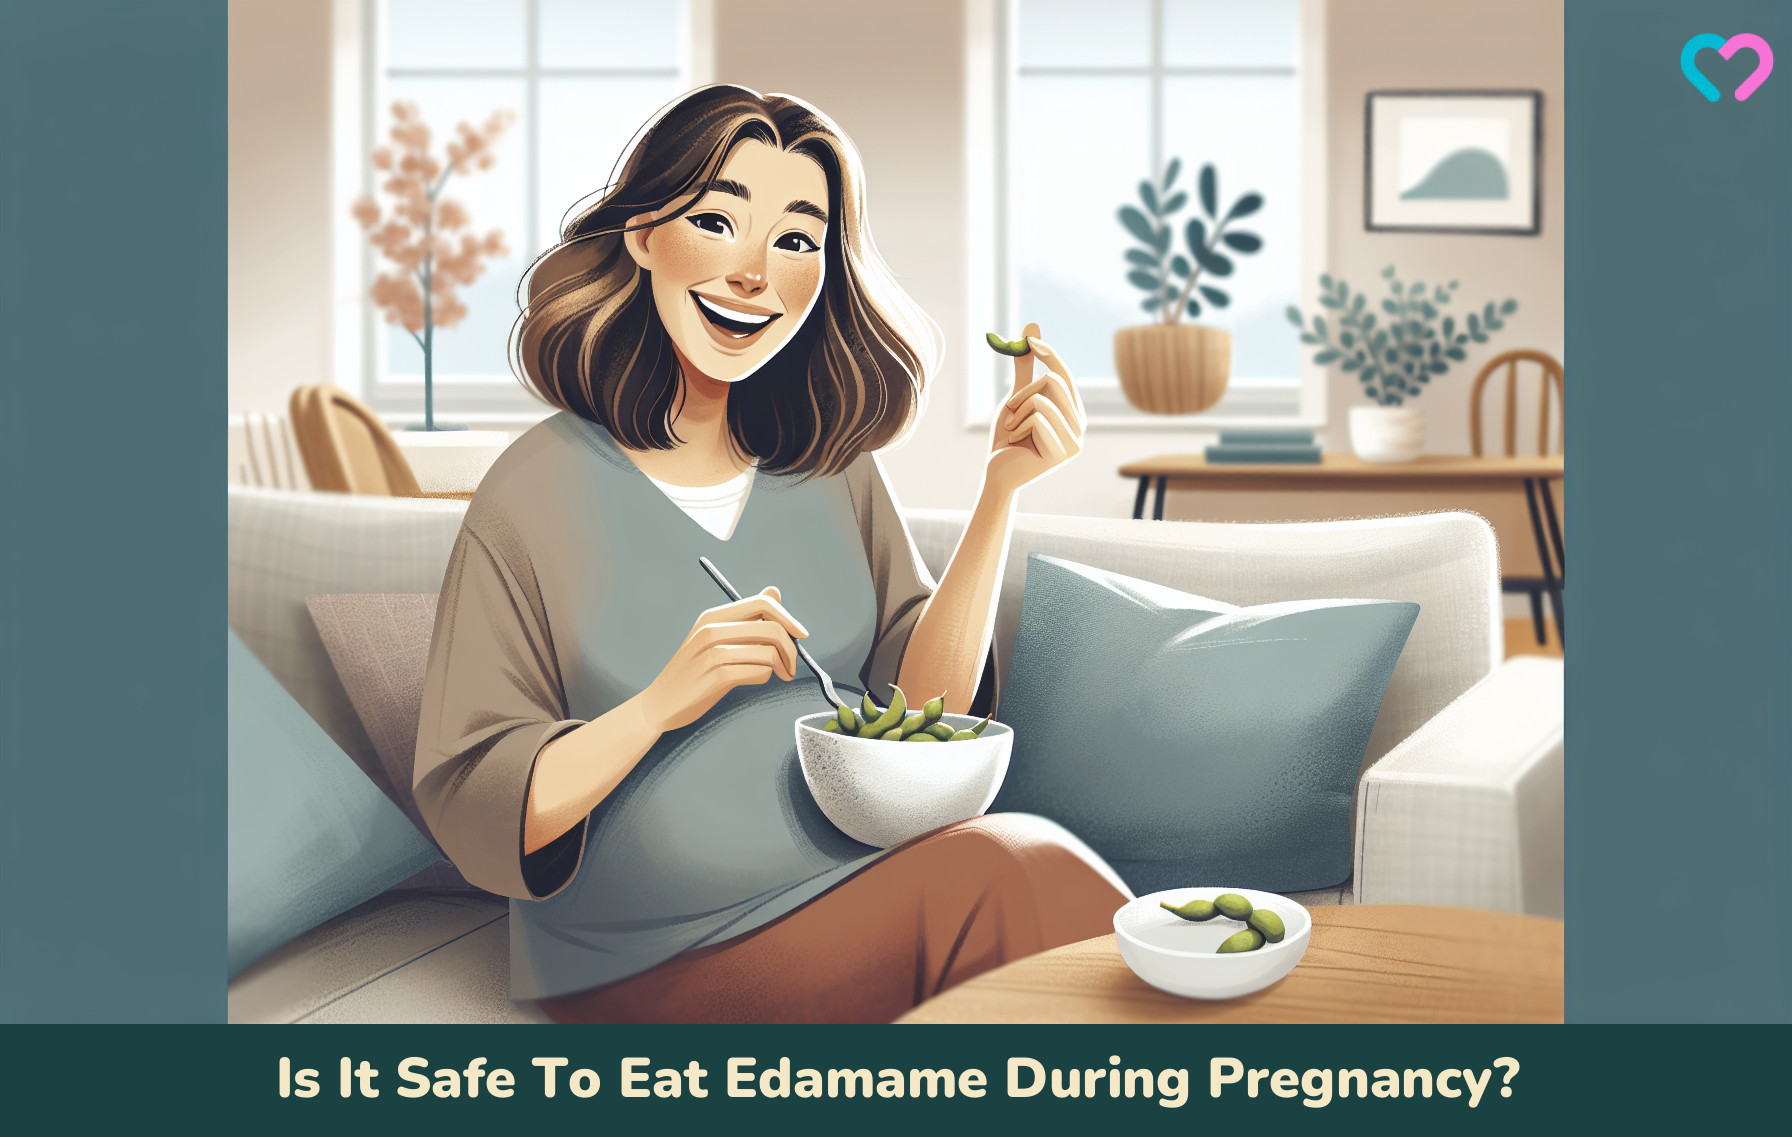 edamame during pregnancy_illustration